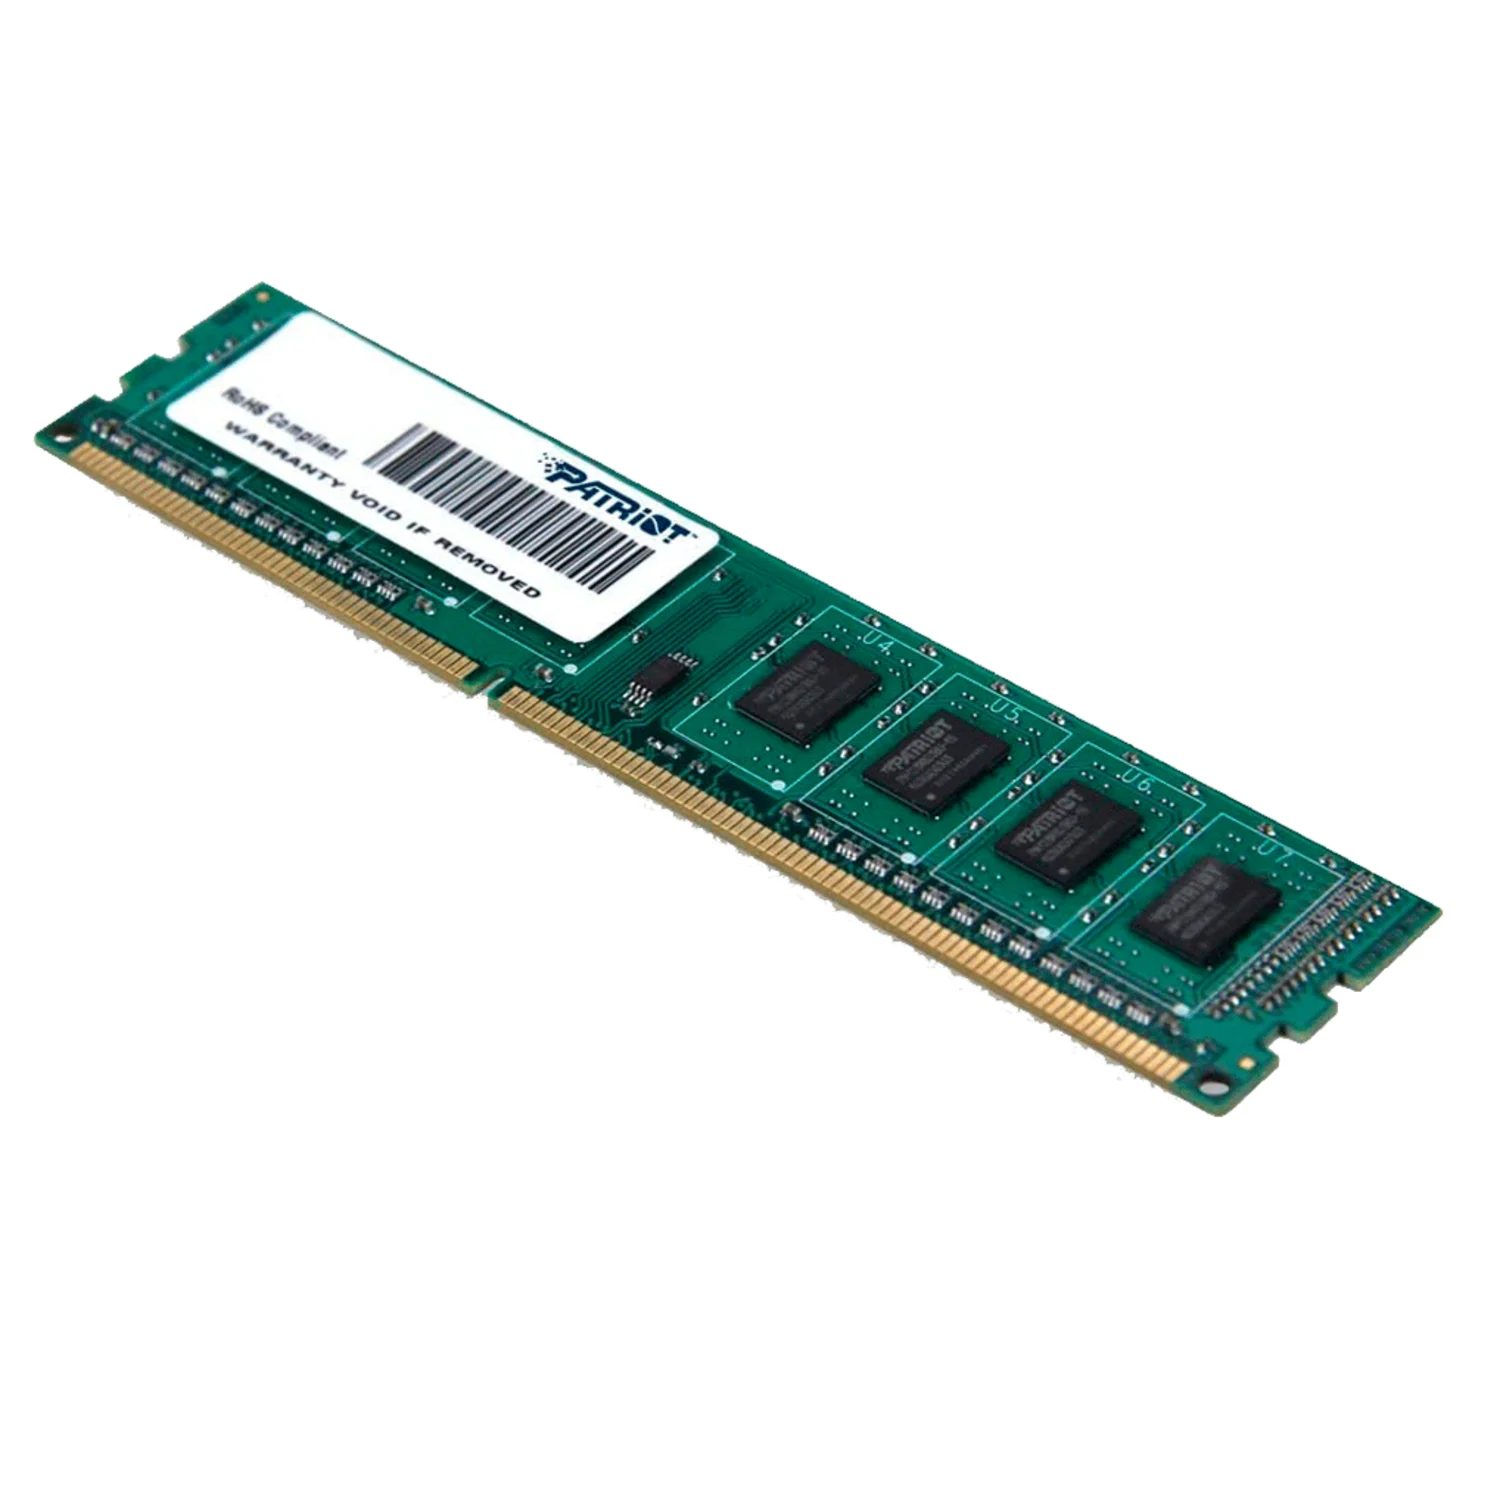 Memória Patriot Signature 4GB / DDR3 / 1333MHz / 1X4GB - (PSD34G133381)